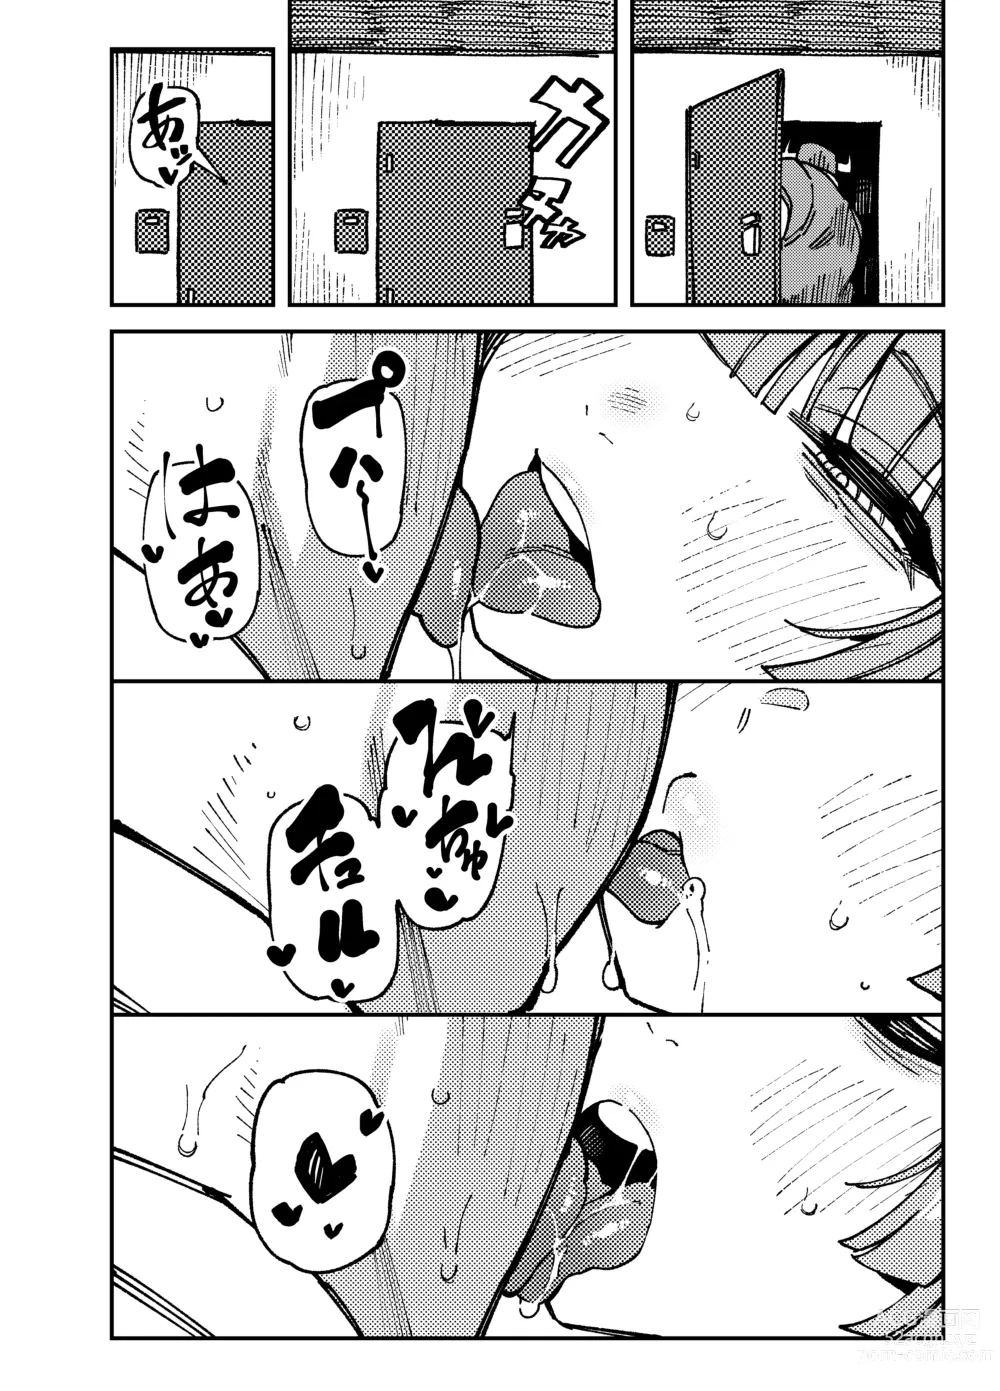 Page 11 of doujinshi 家裡過於潮濕長出致幻蘑菇意外誤食後發情的那些事